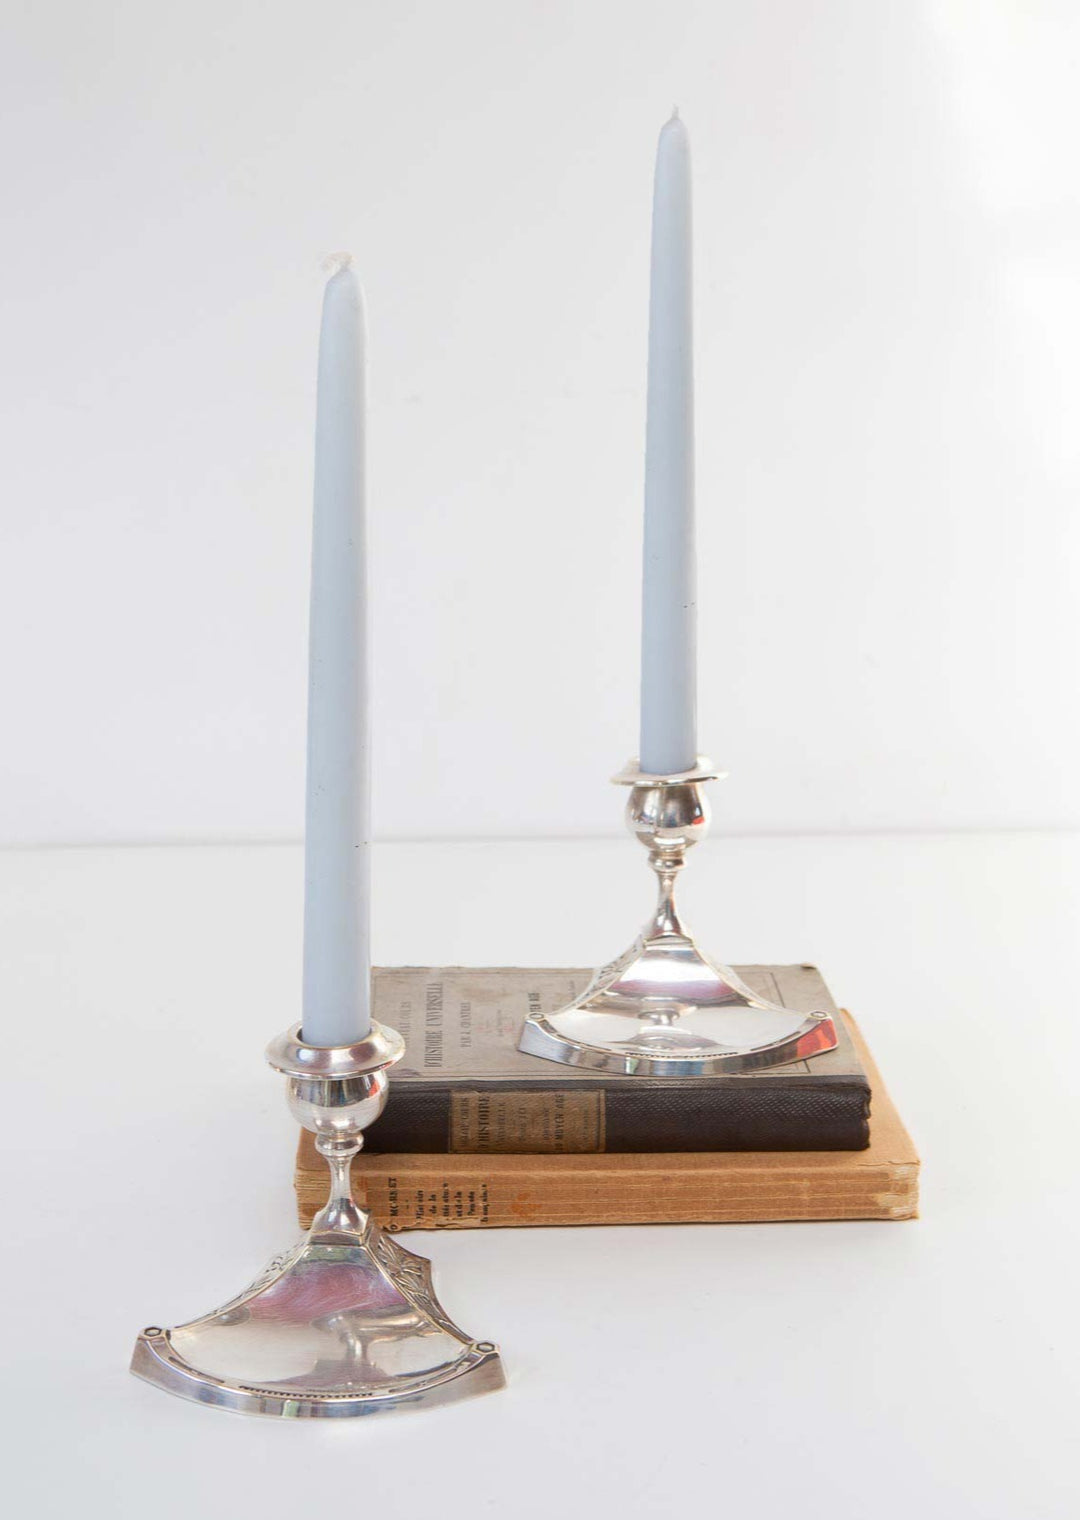 Pareja antiguos candeleros suecos art nouveau c. 1900 Swedish candlesticks